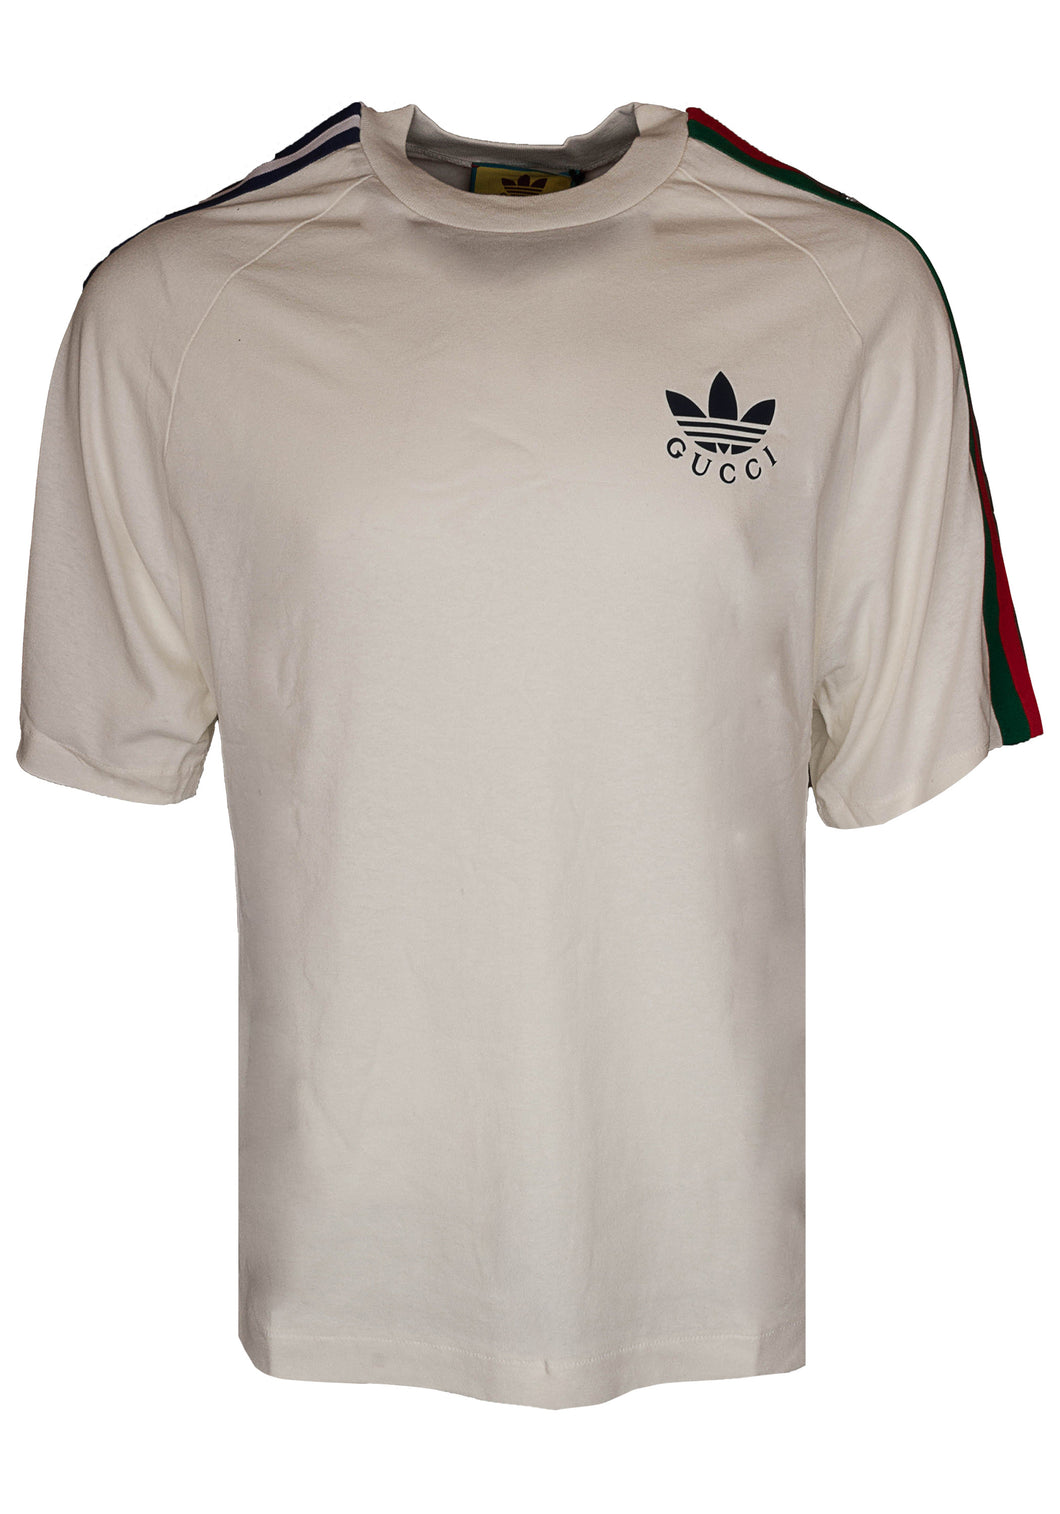 Gucci Herren T-Shirt | S/S 692114 COTTON TEE